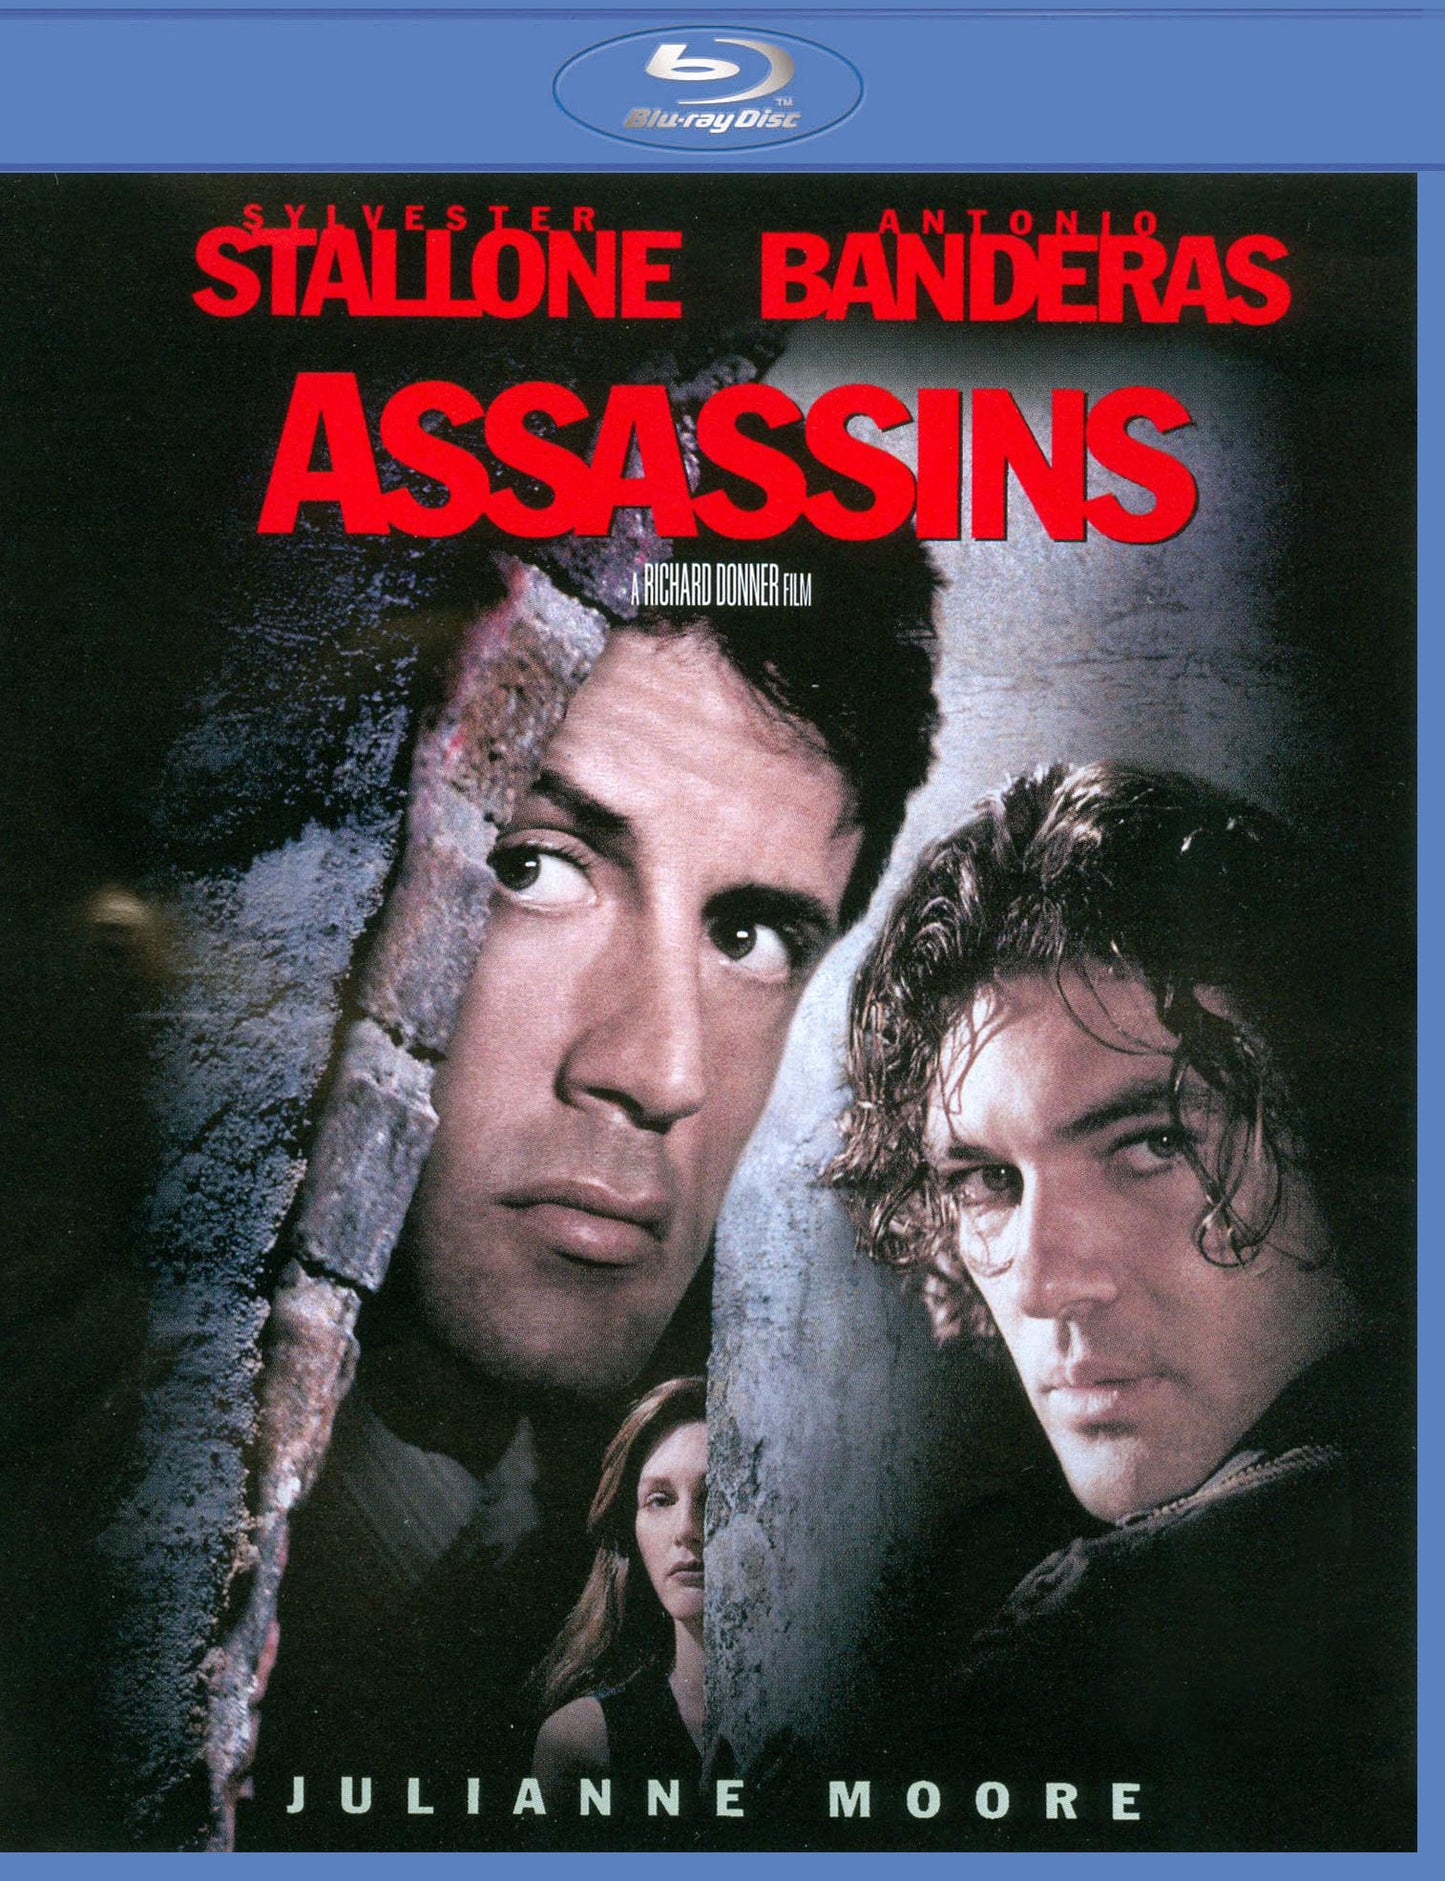 Assassins [Blu-ray] cover art